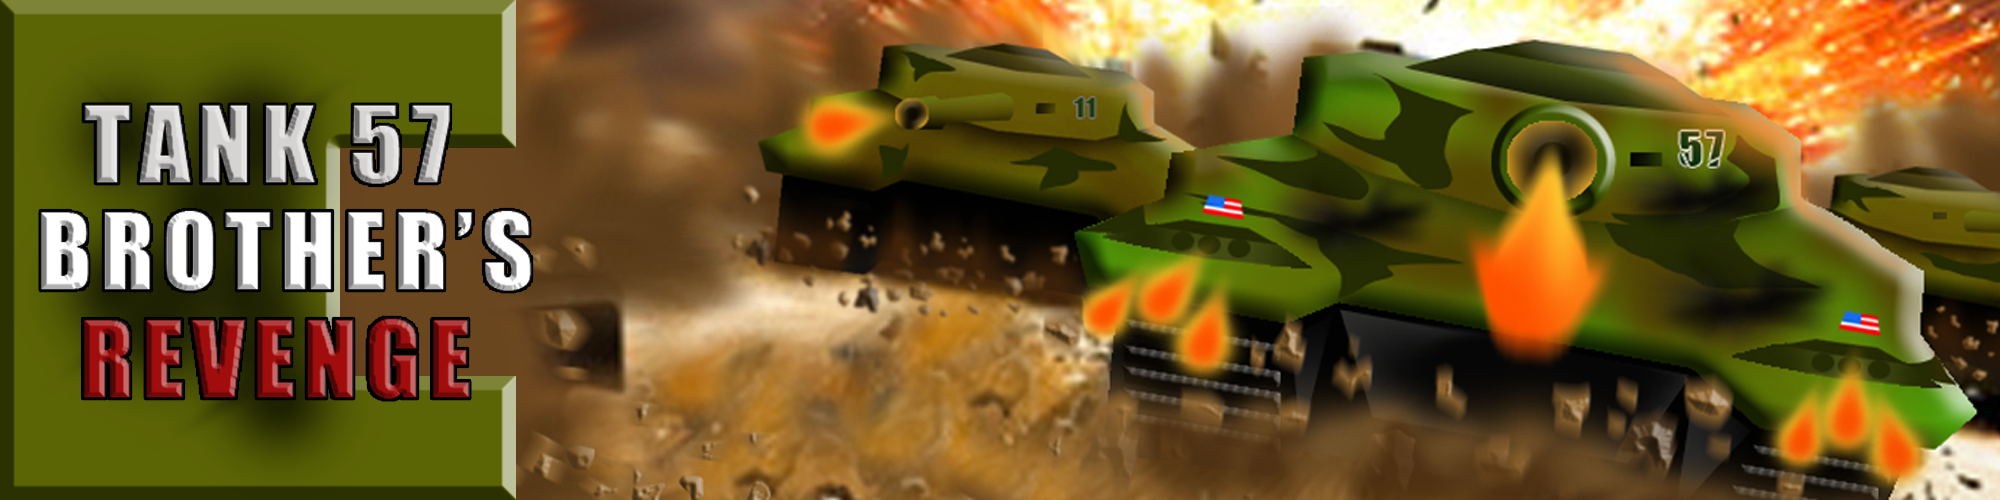 Tank 57 Brother's Revenge